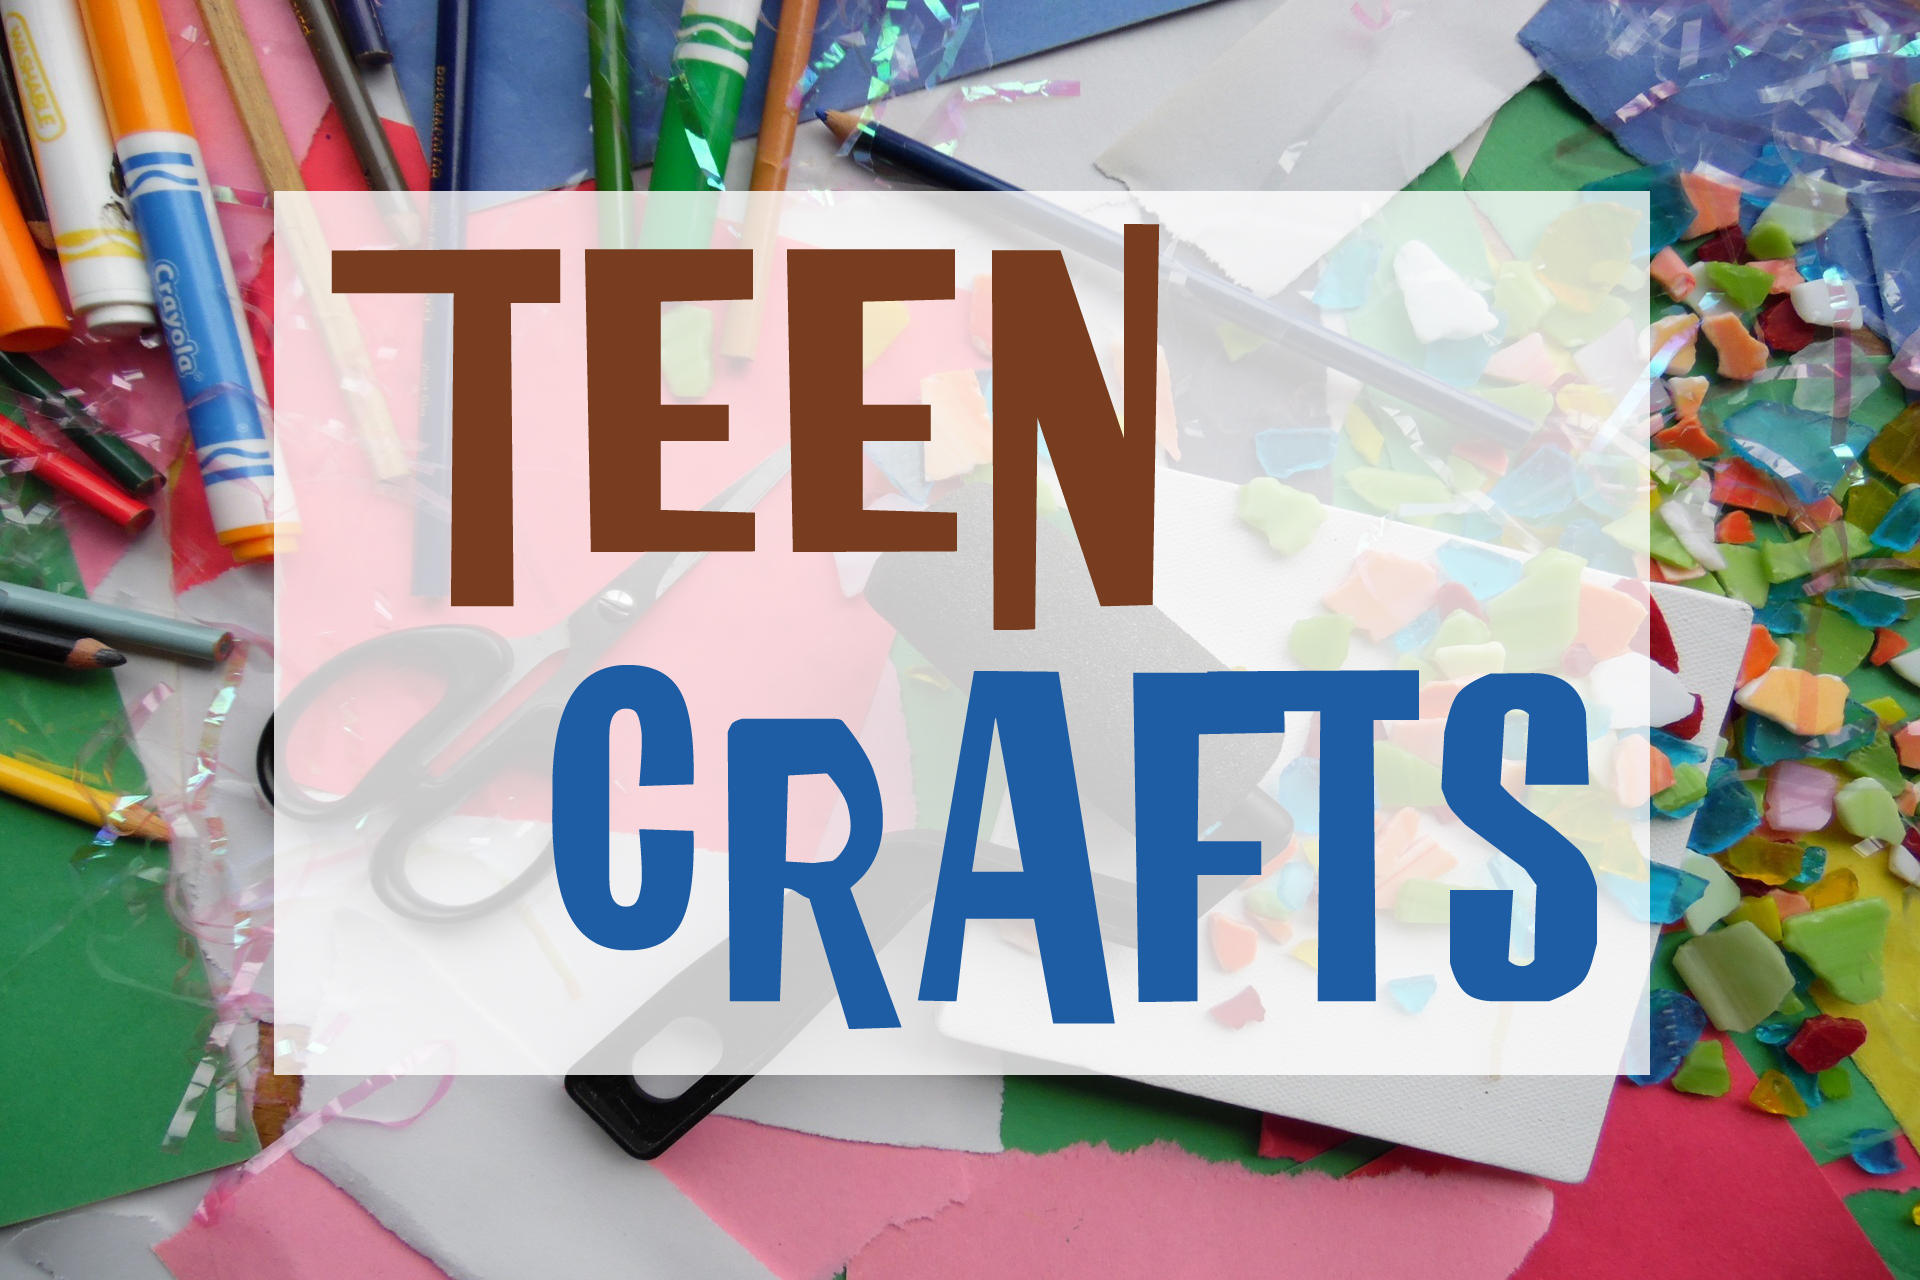 Teen Craft 49